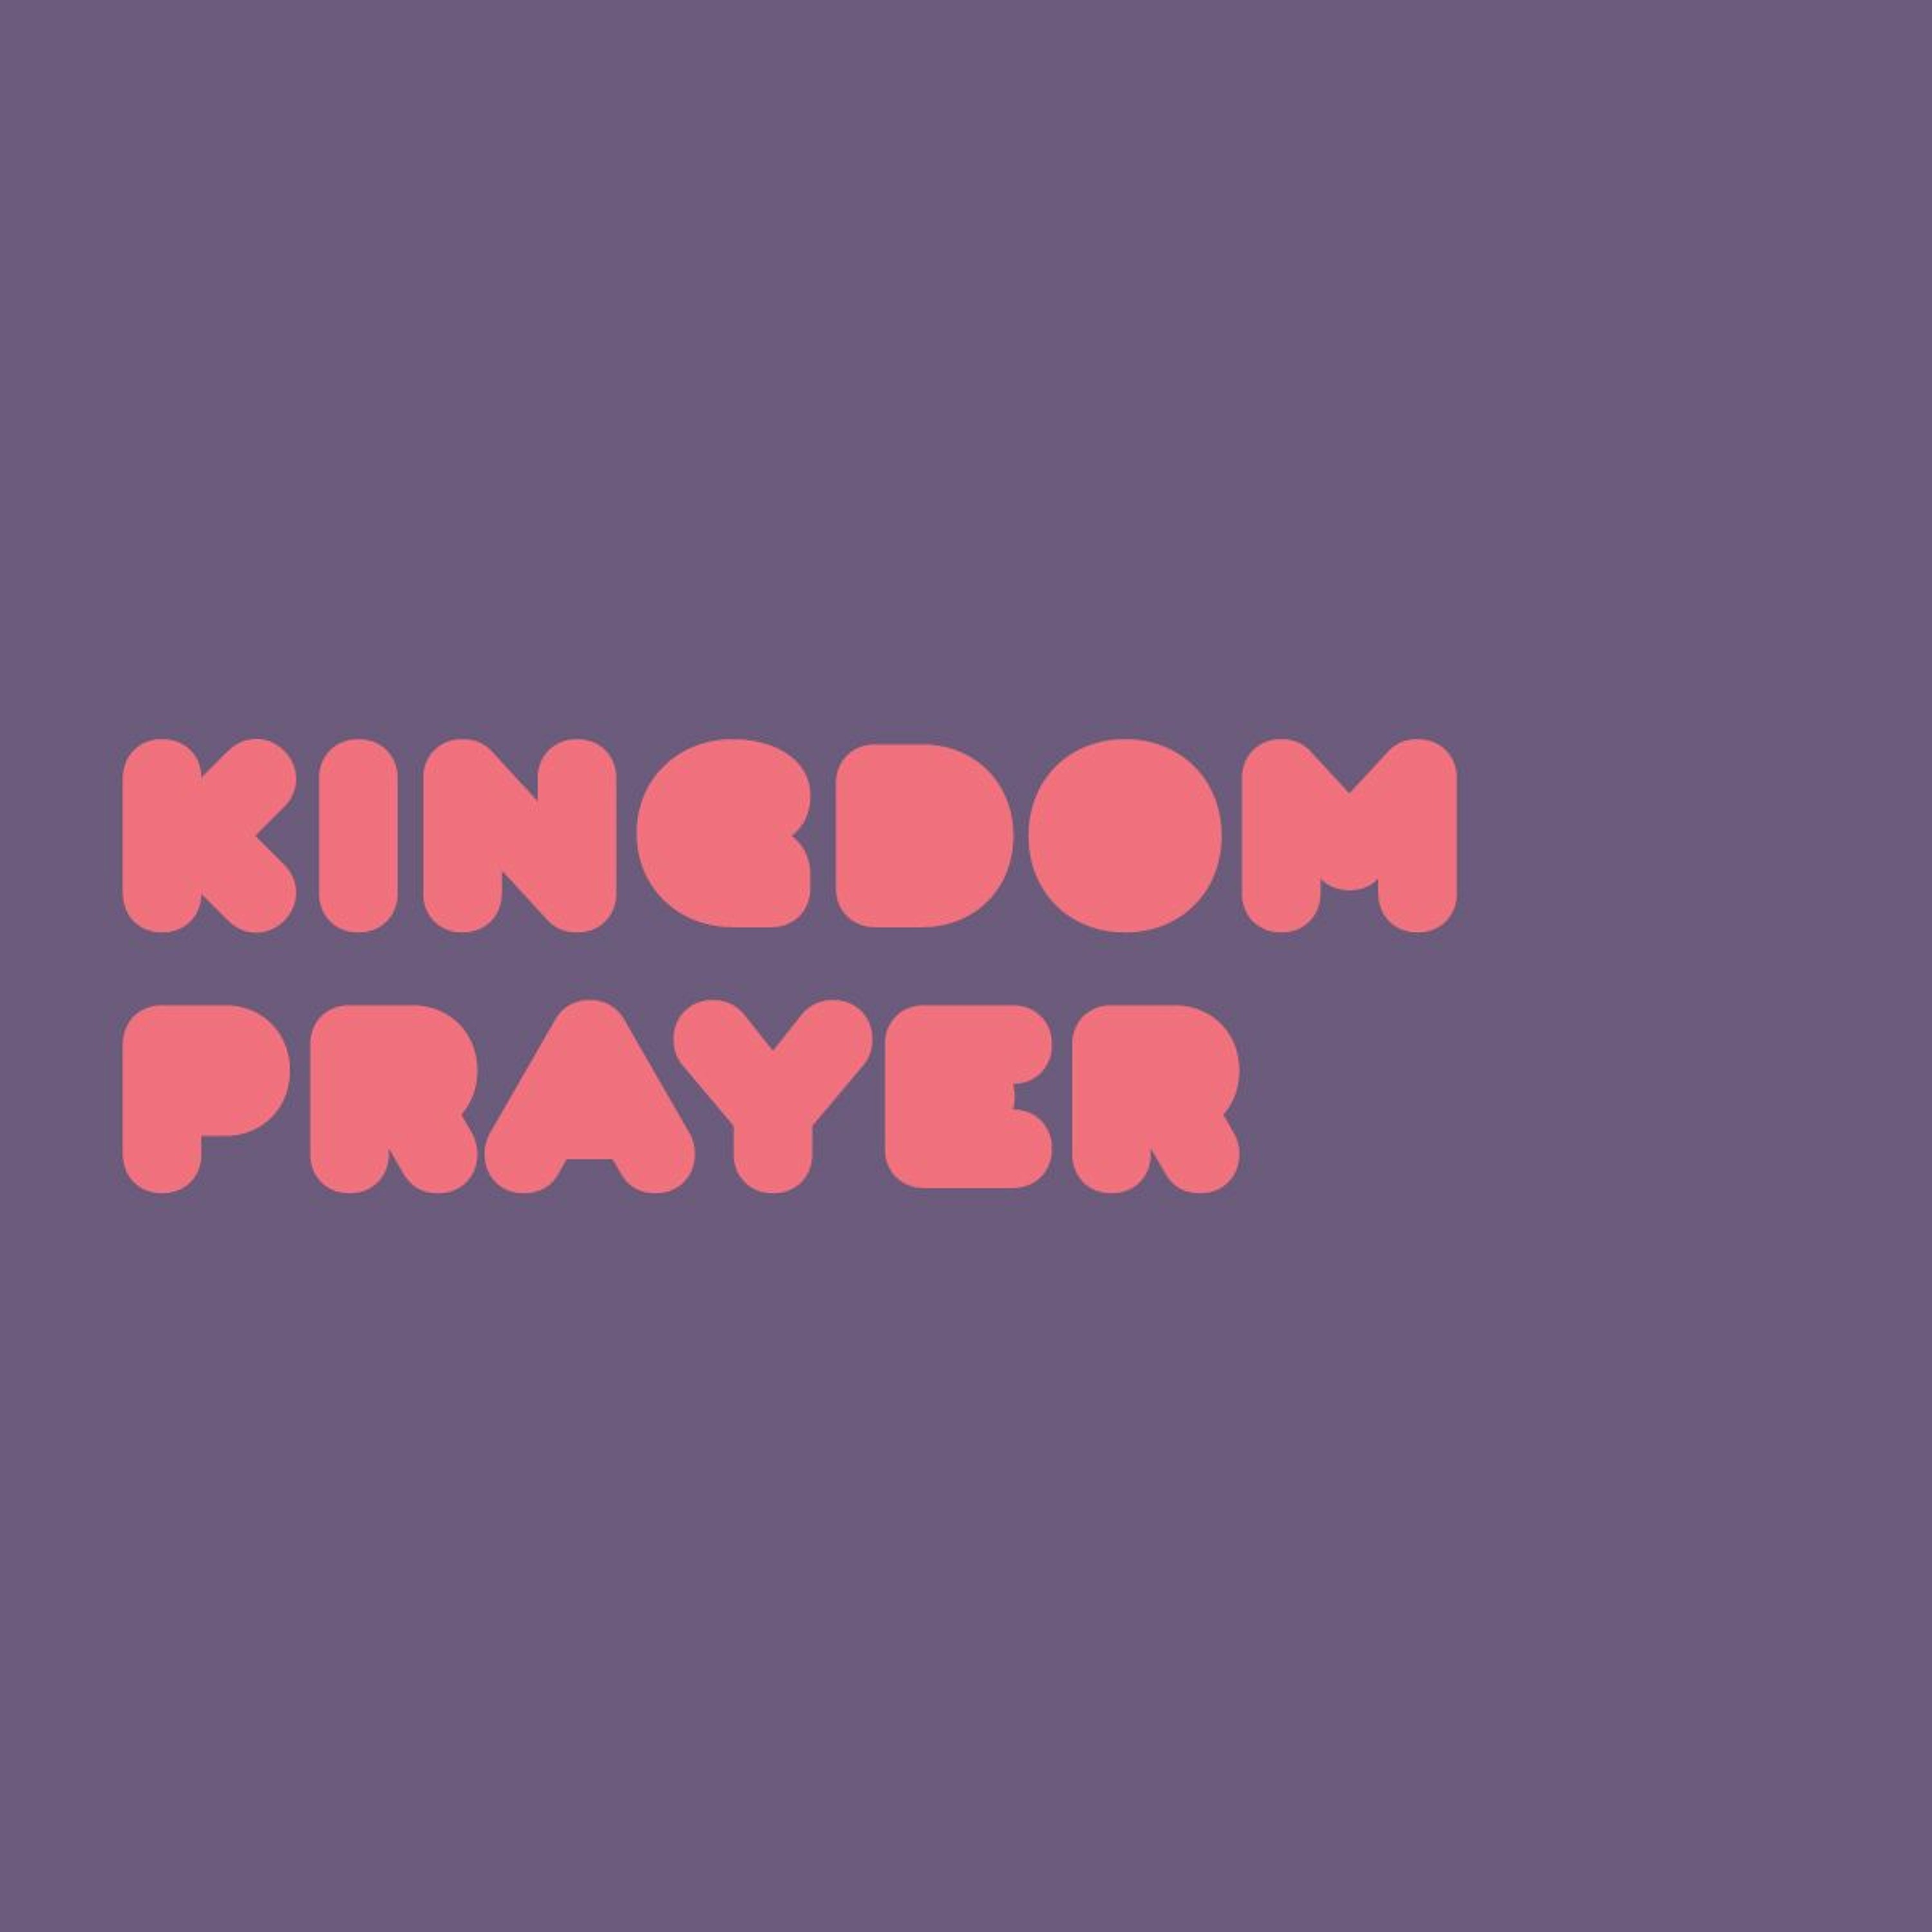 ’Kingdom Prayer’ / Neil Dawson